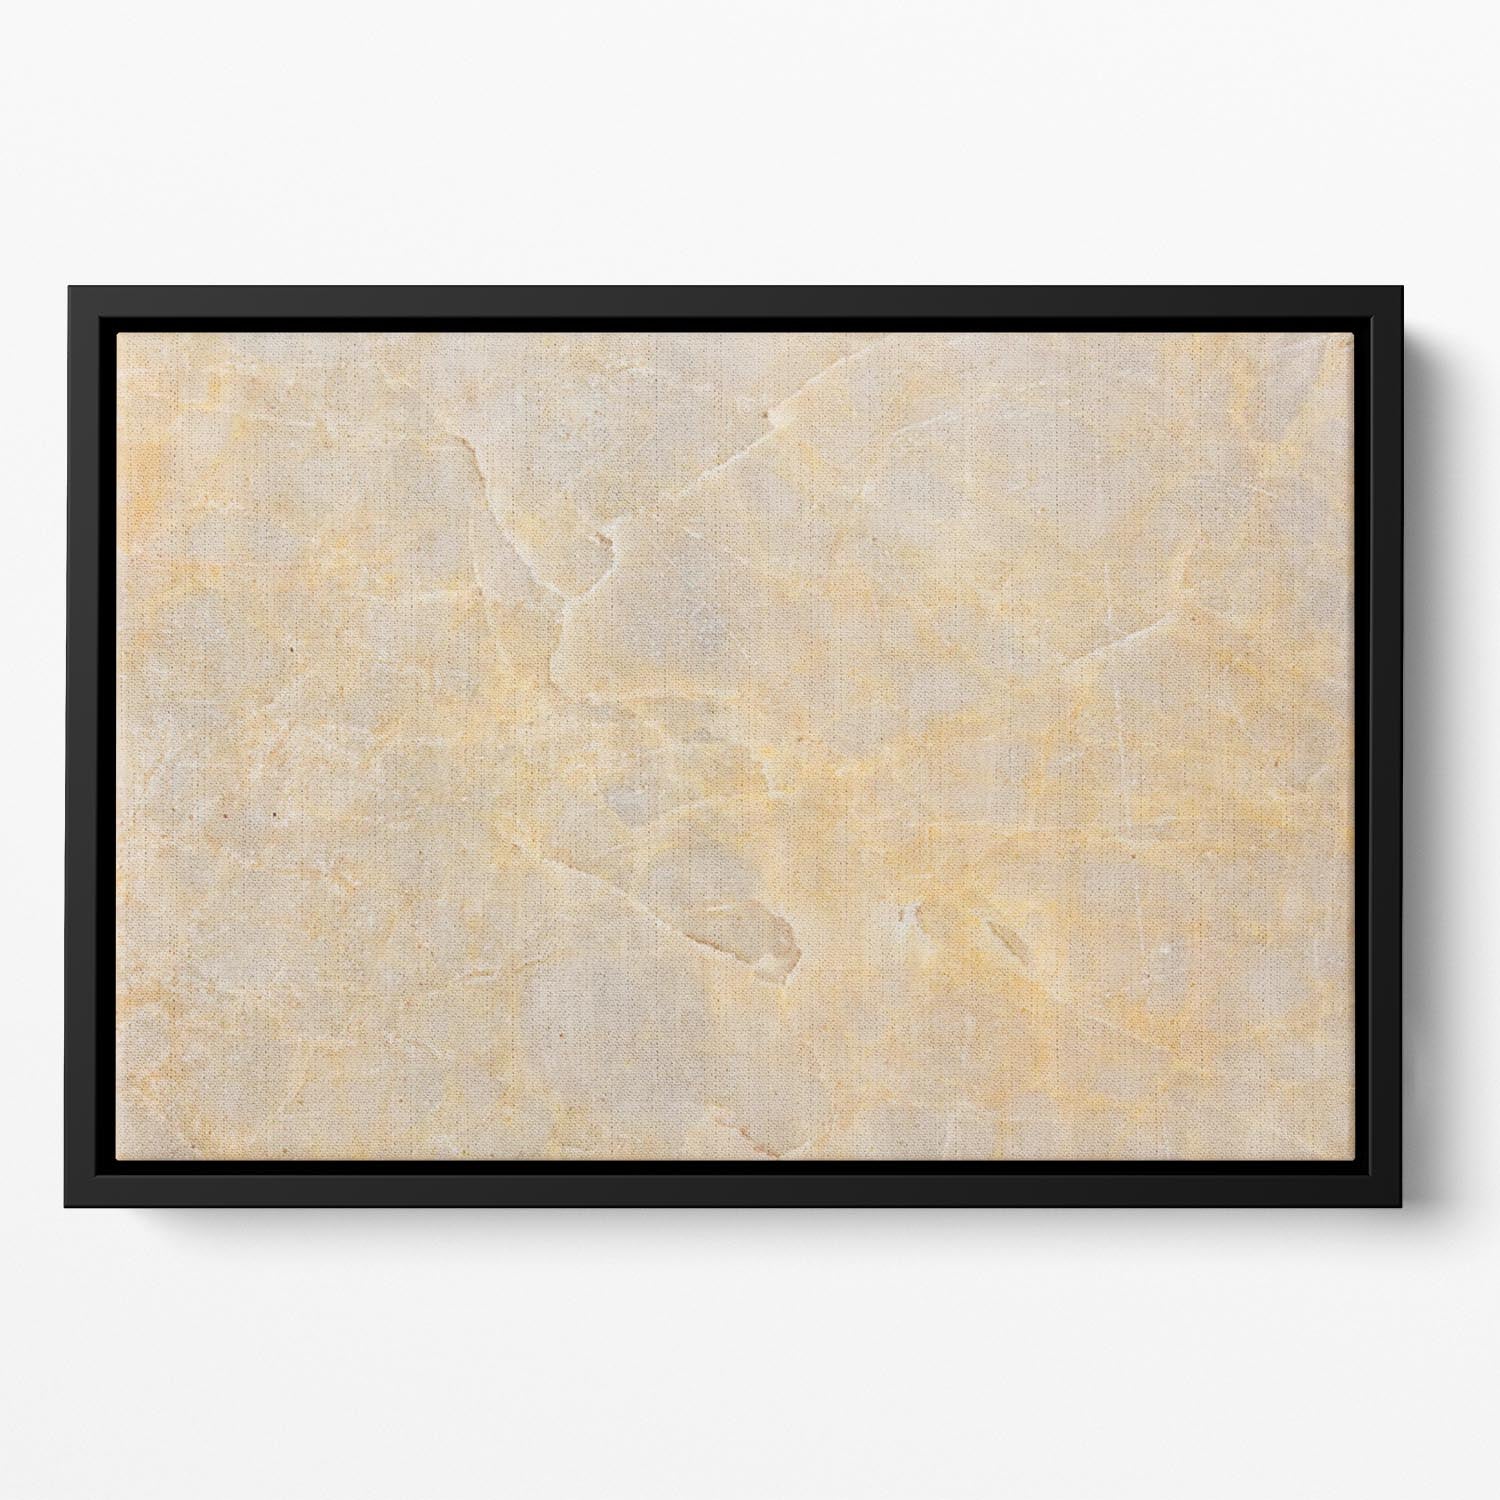 Textured Beige Marble Floating Framed Canvas - Canvas Art Rocks - 2